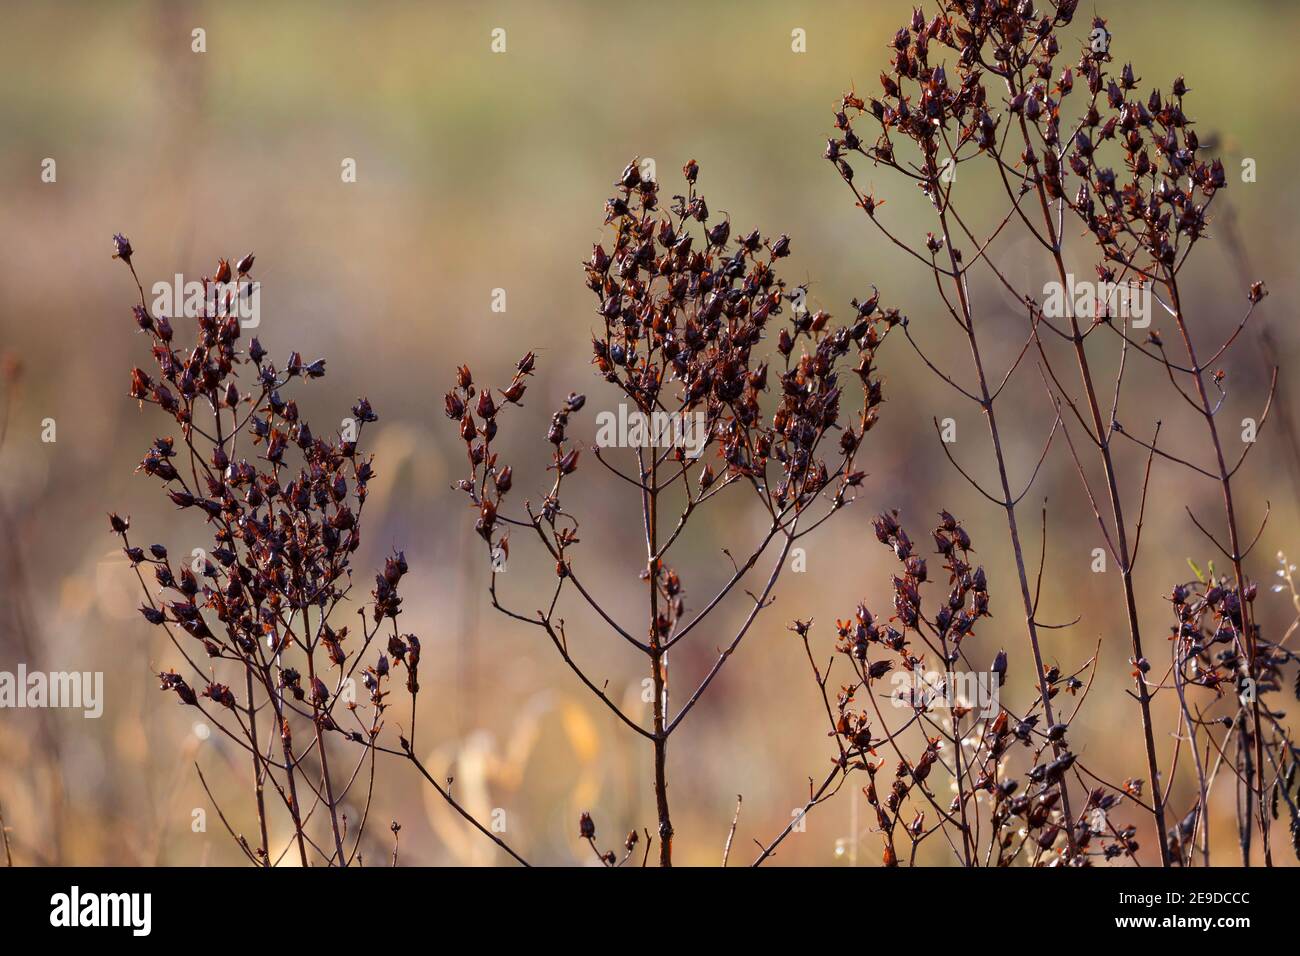 Common St Johns-wort, perforate St Johns-wort, klamath weed, St. Johns-wort (Hypericum perforatum), dry plant in autum, Germany Stock Photo